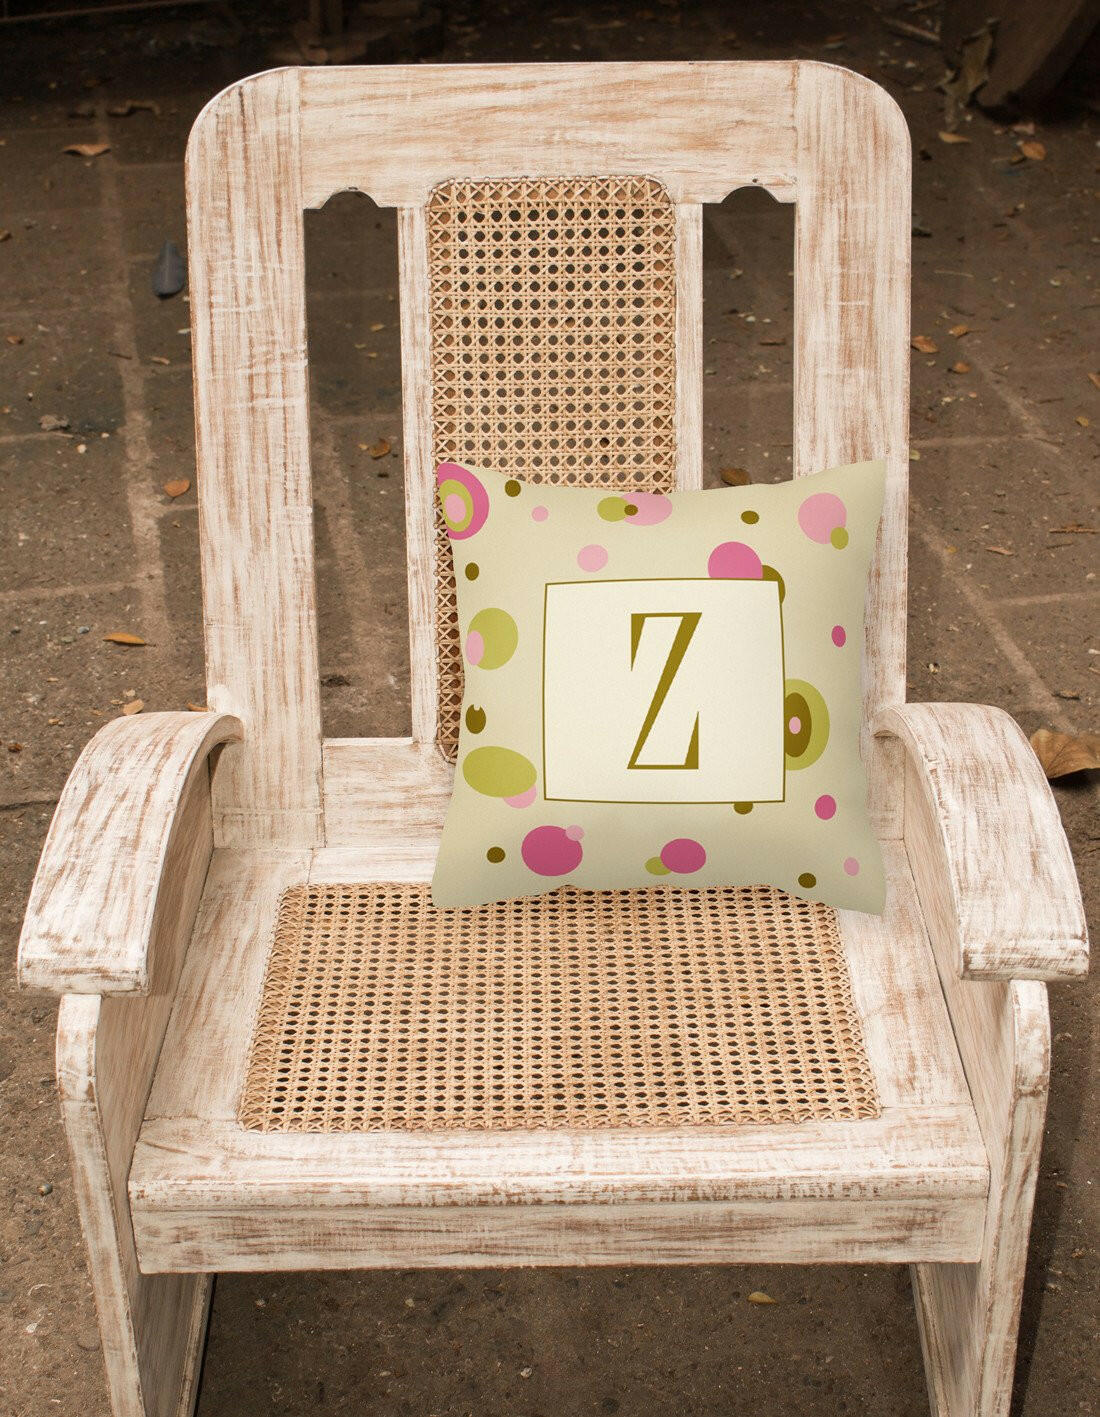 Letter Z Initial Monogram - Tan Dots Decorative   Canvas Fabric Pillow - the-store.com